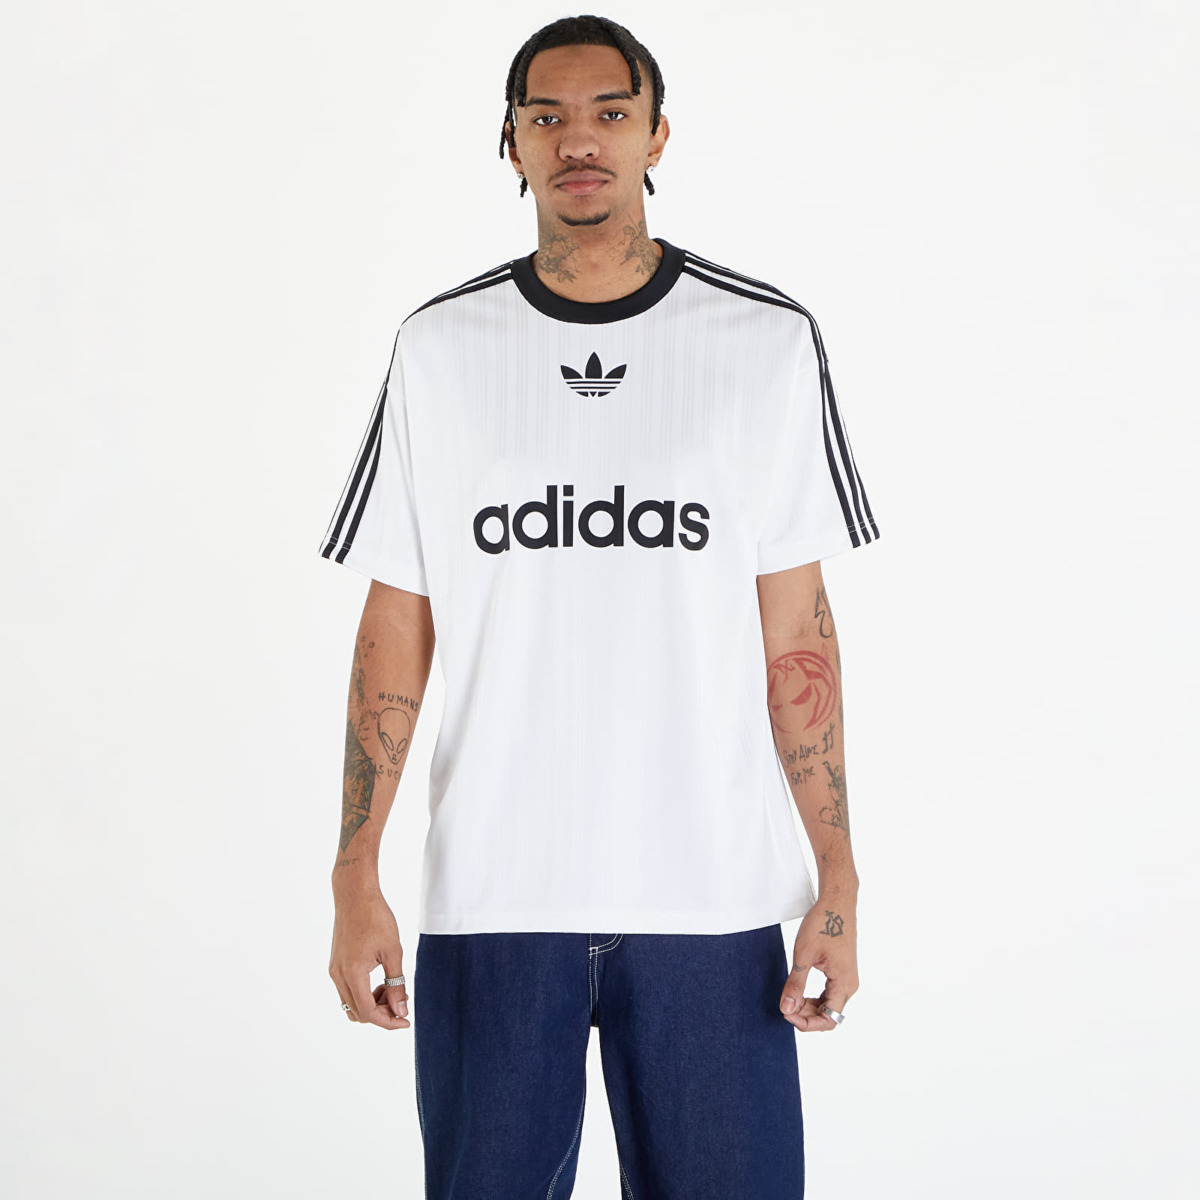 Adidas - Black Top for Man from Footshop GOOFASH